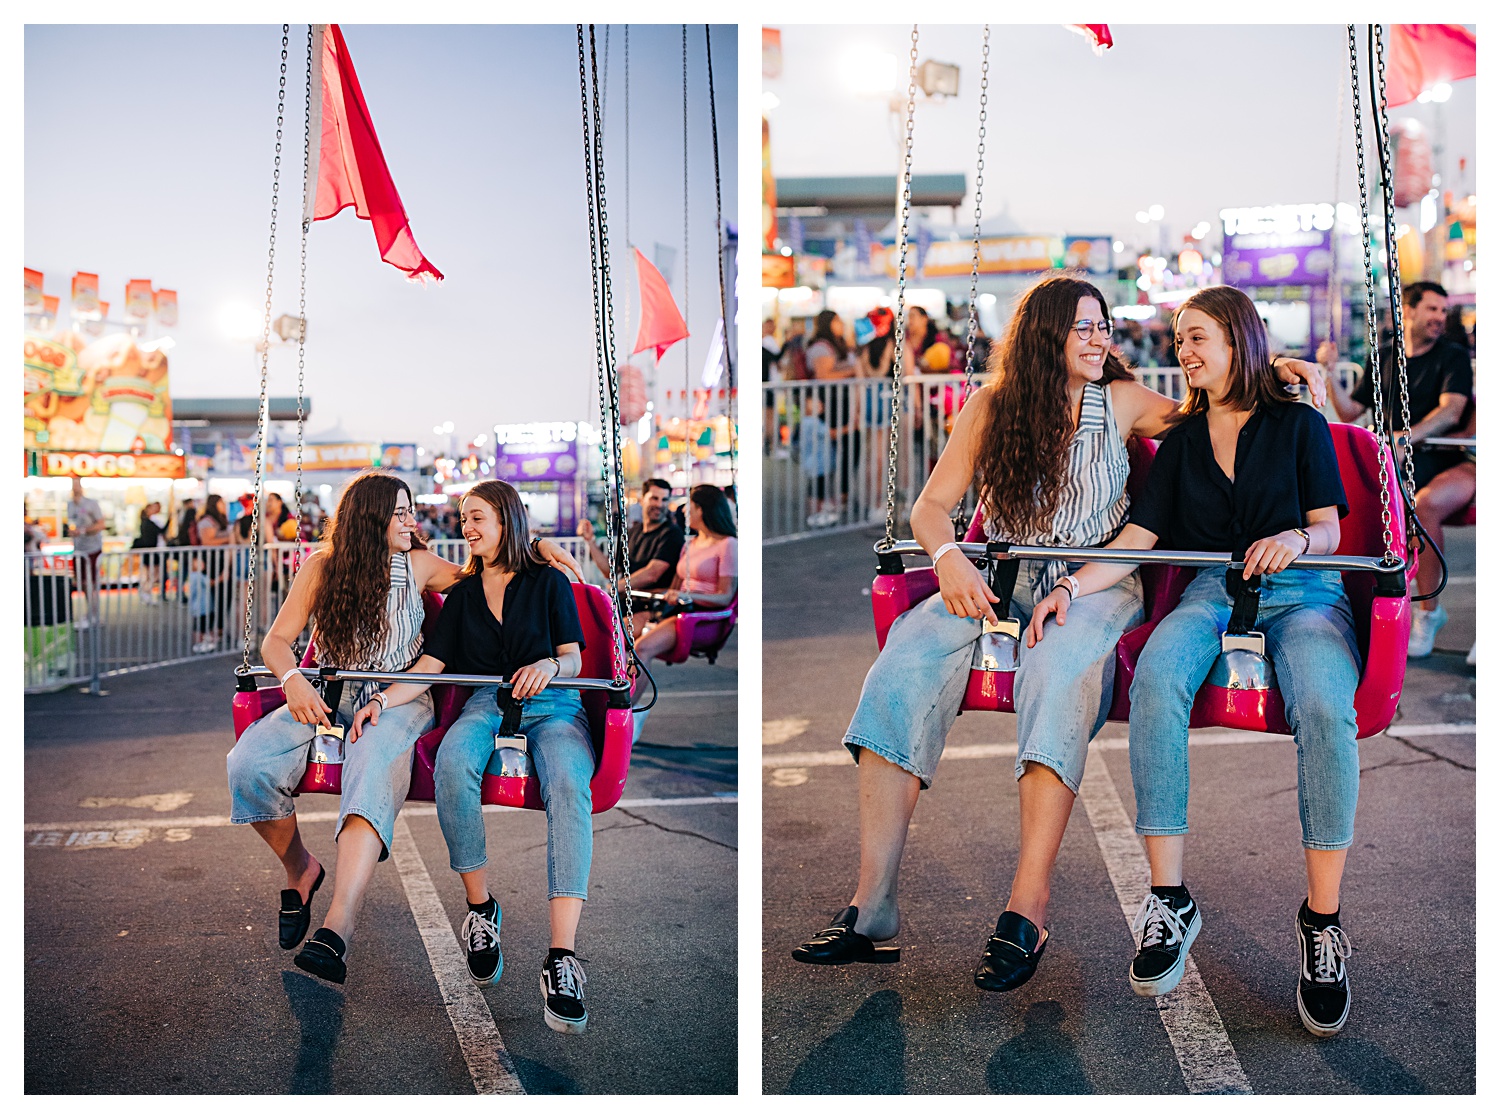 lesbian couple on big swing ride at oc fair couples photos